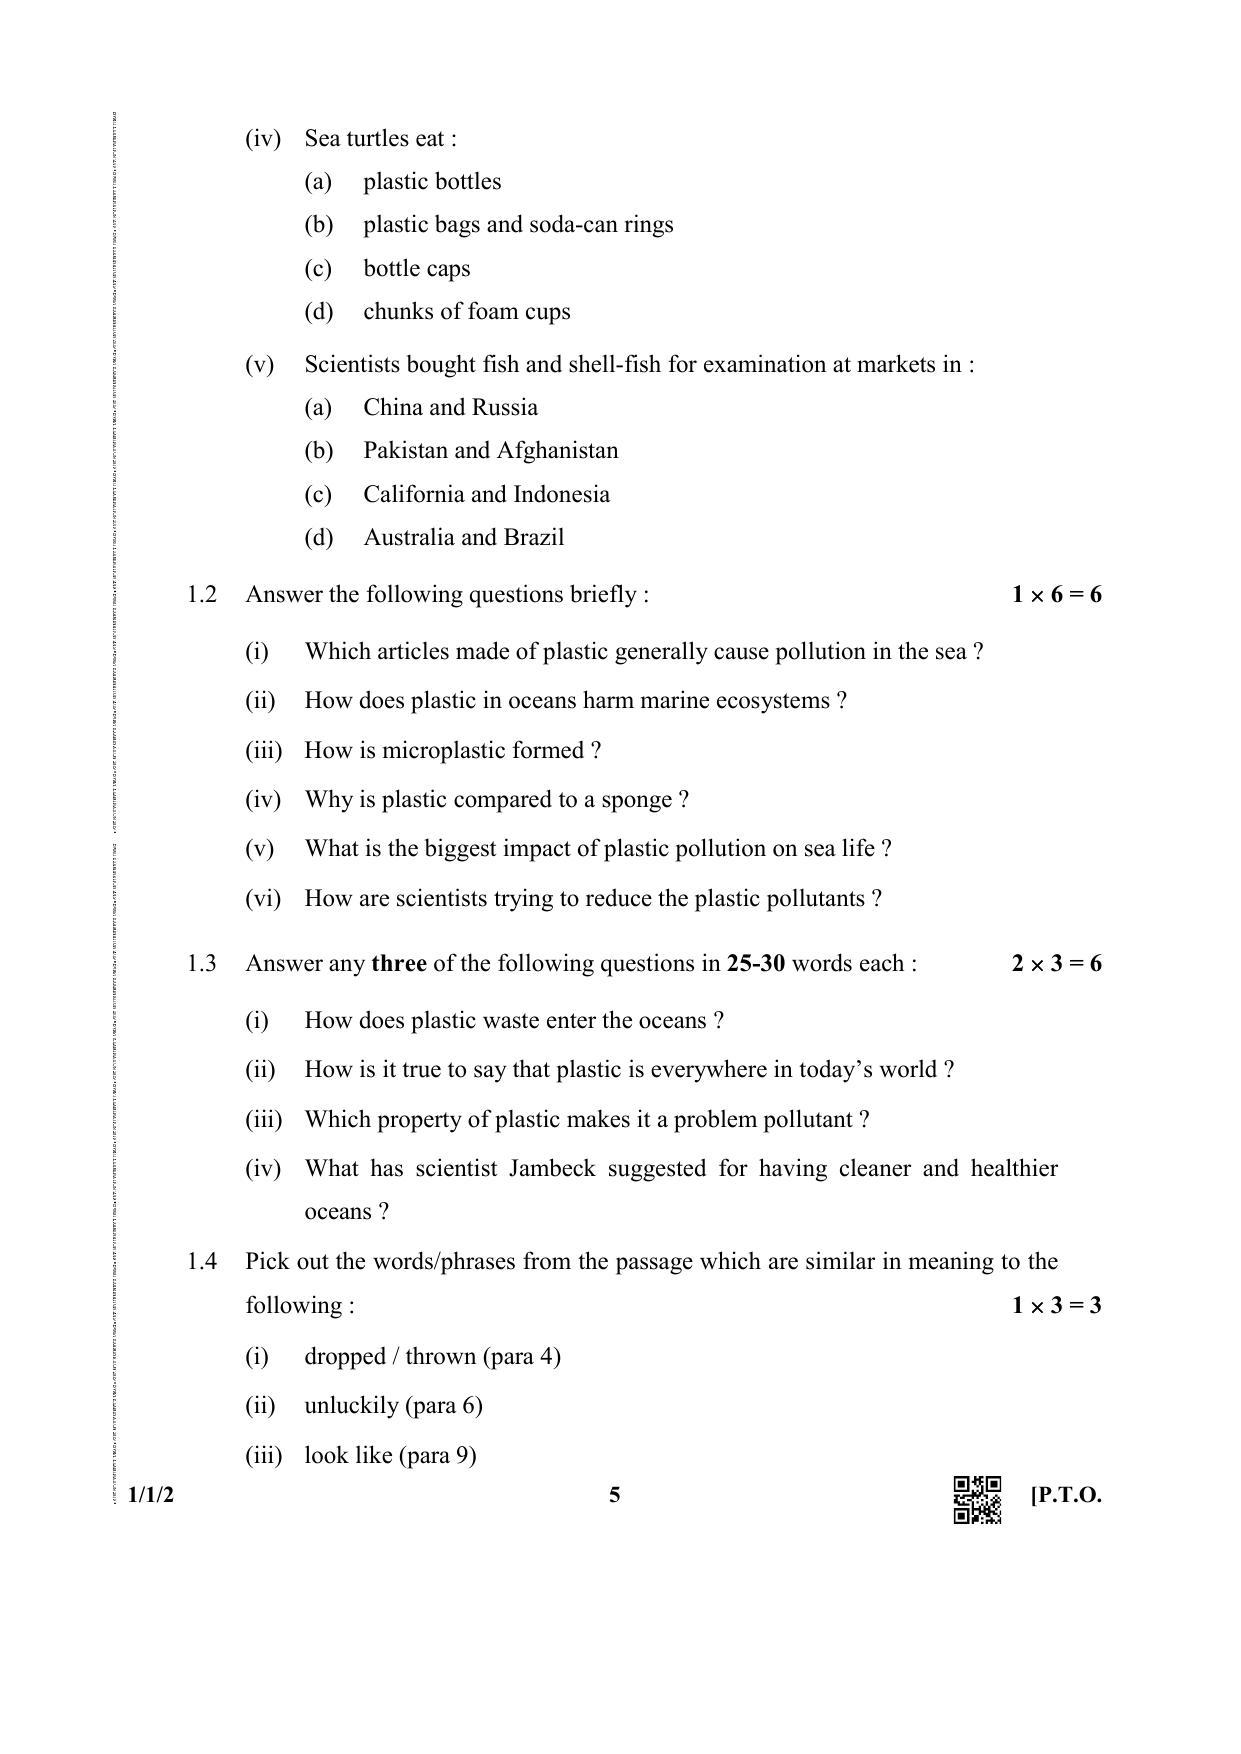 CBSE Class 12 1-1-2 (English Core) 2019 Question Paper - Page 5